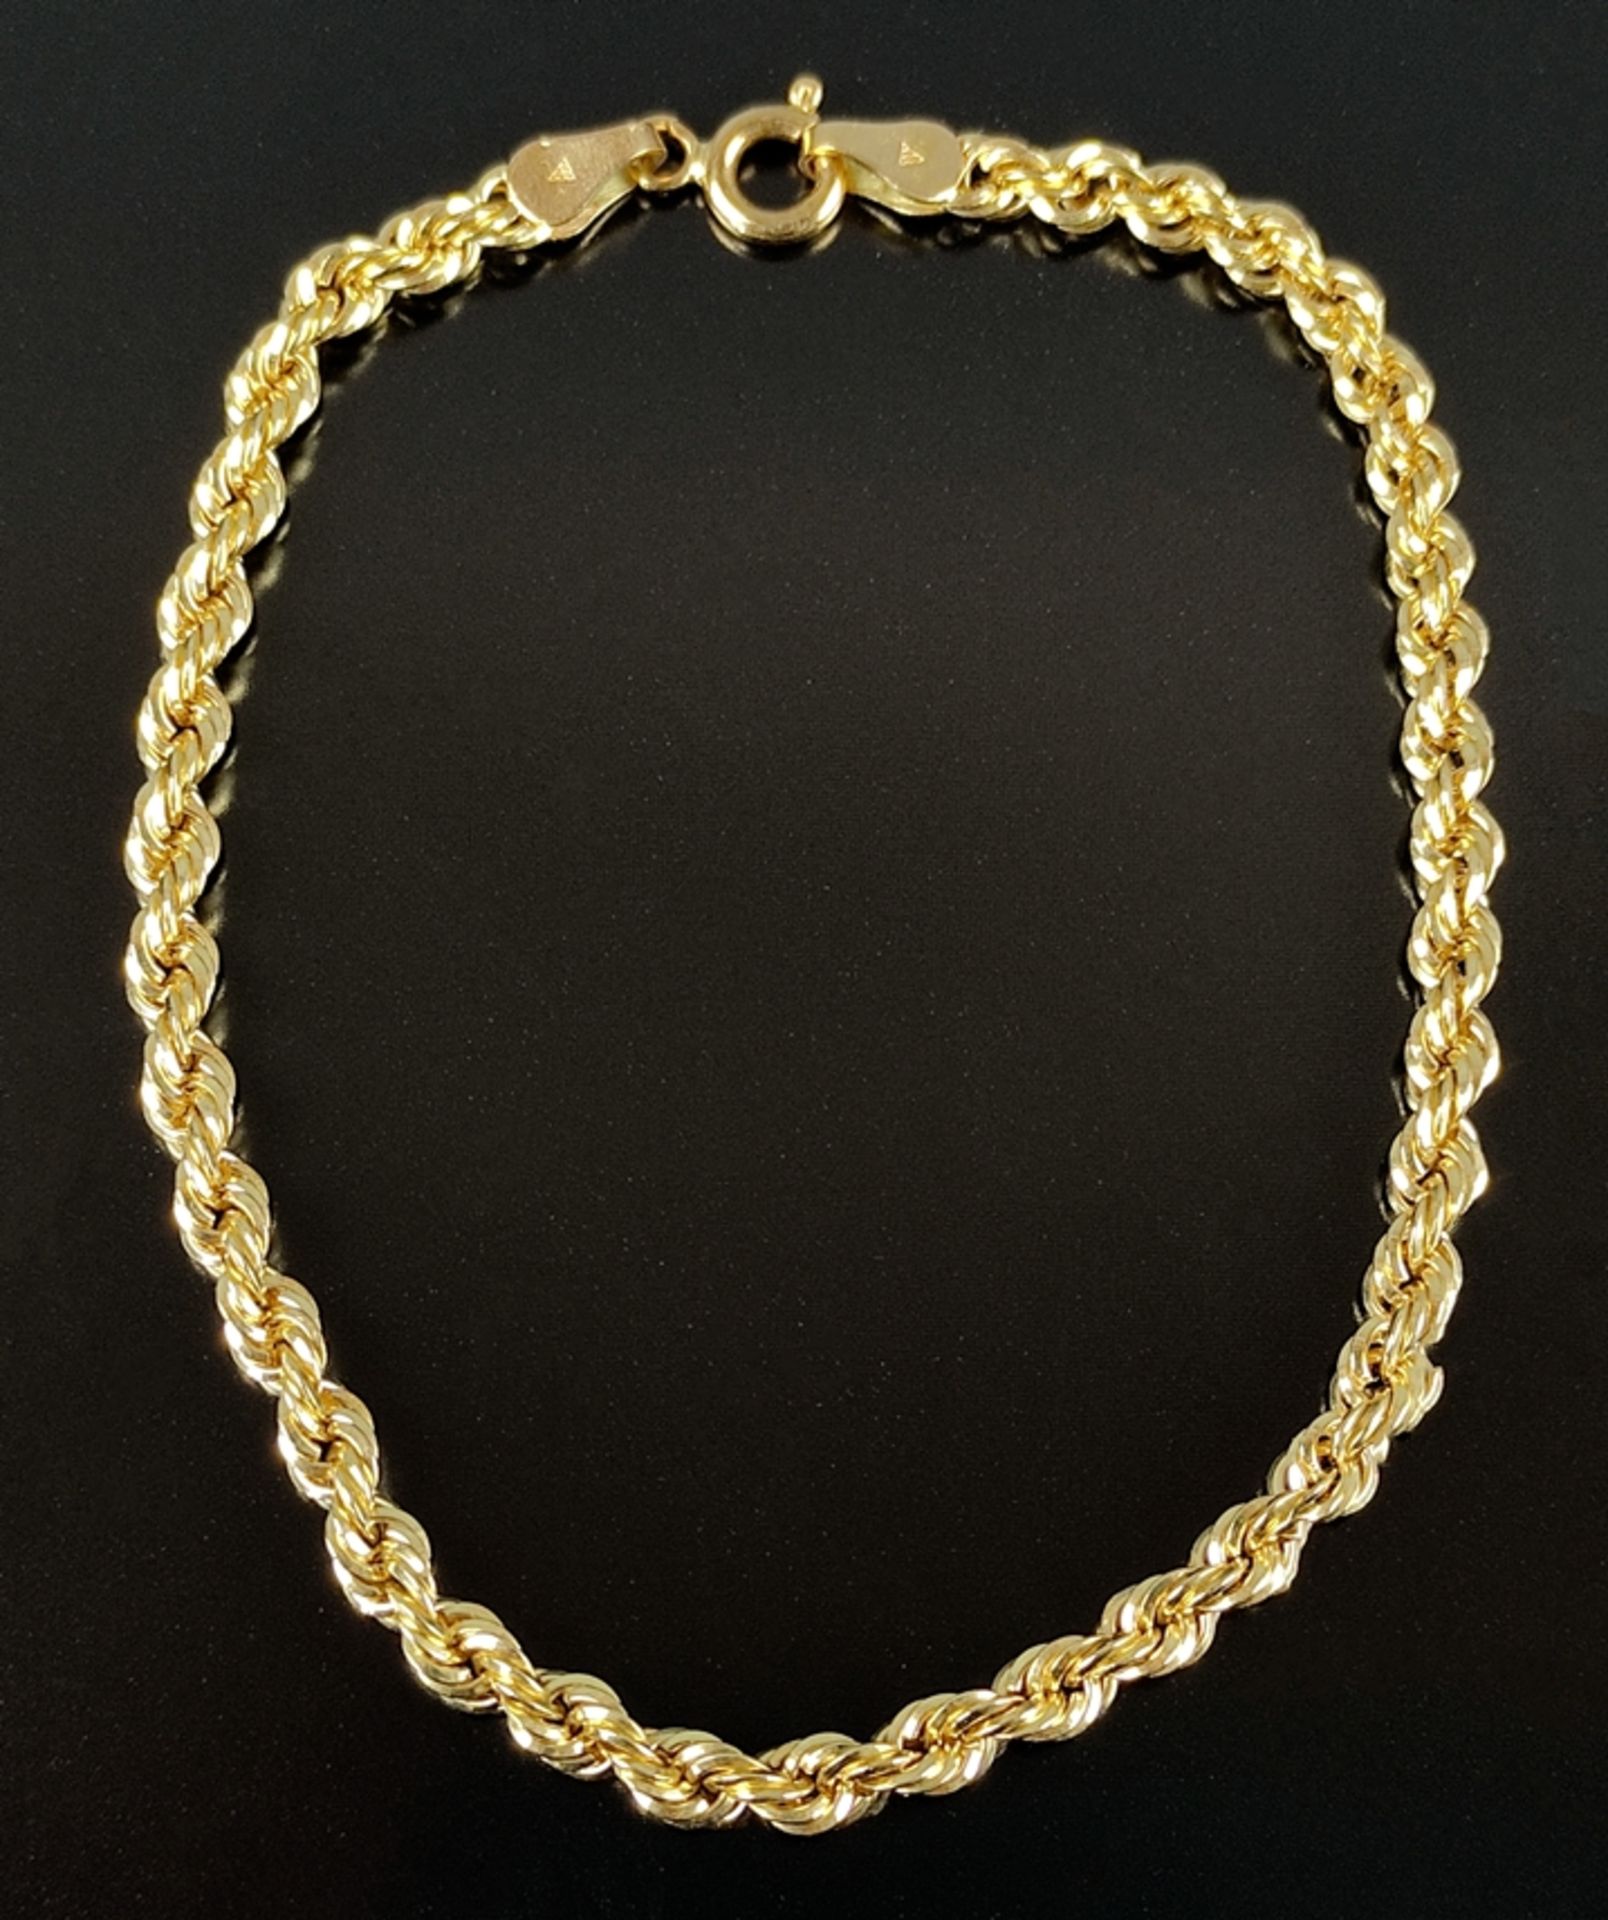 Kordel-Armband, 750/18K Gelbgold, 2,8g, Ringverschluss, Länge 18cm